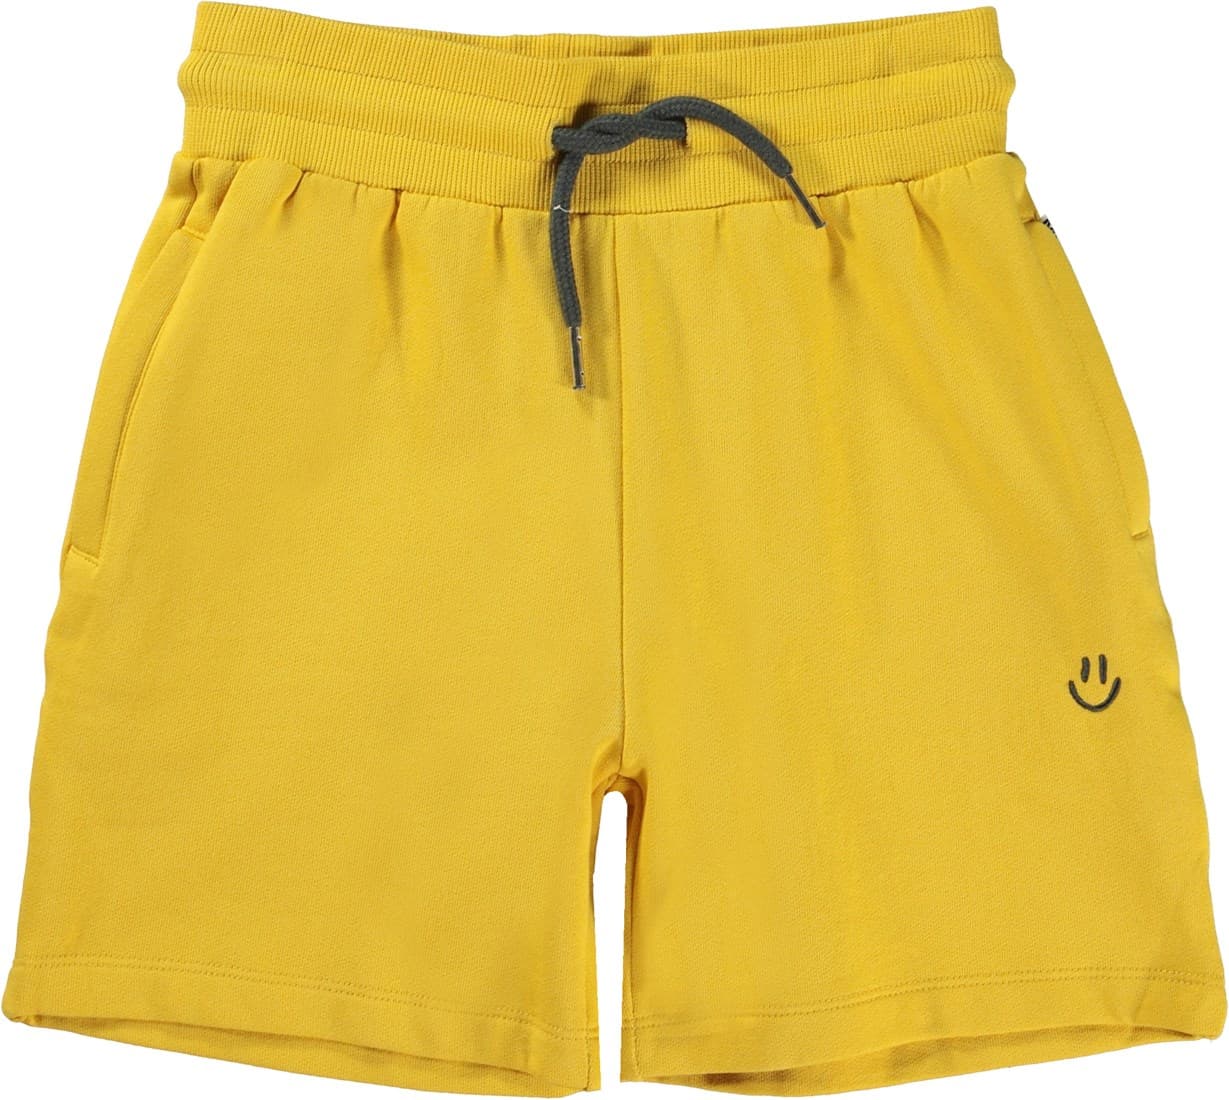 Alw Shorts (Yellow)